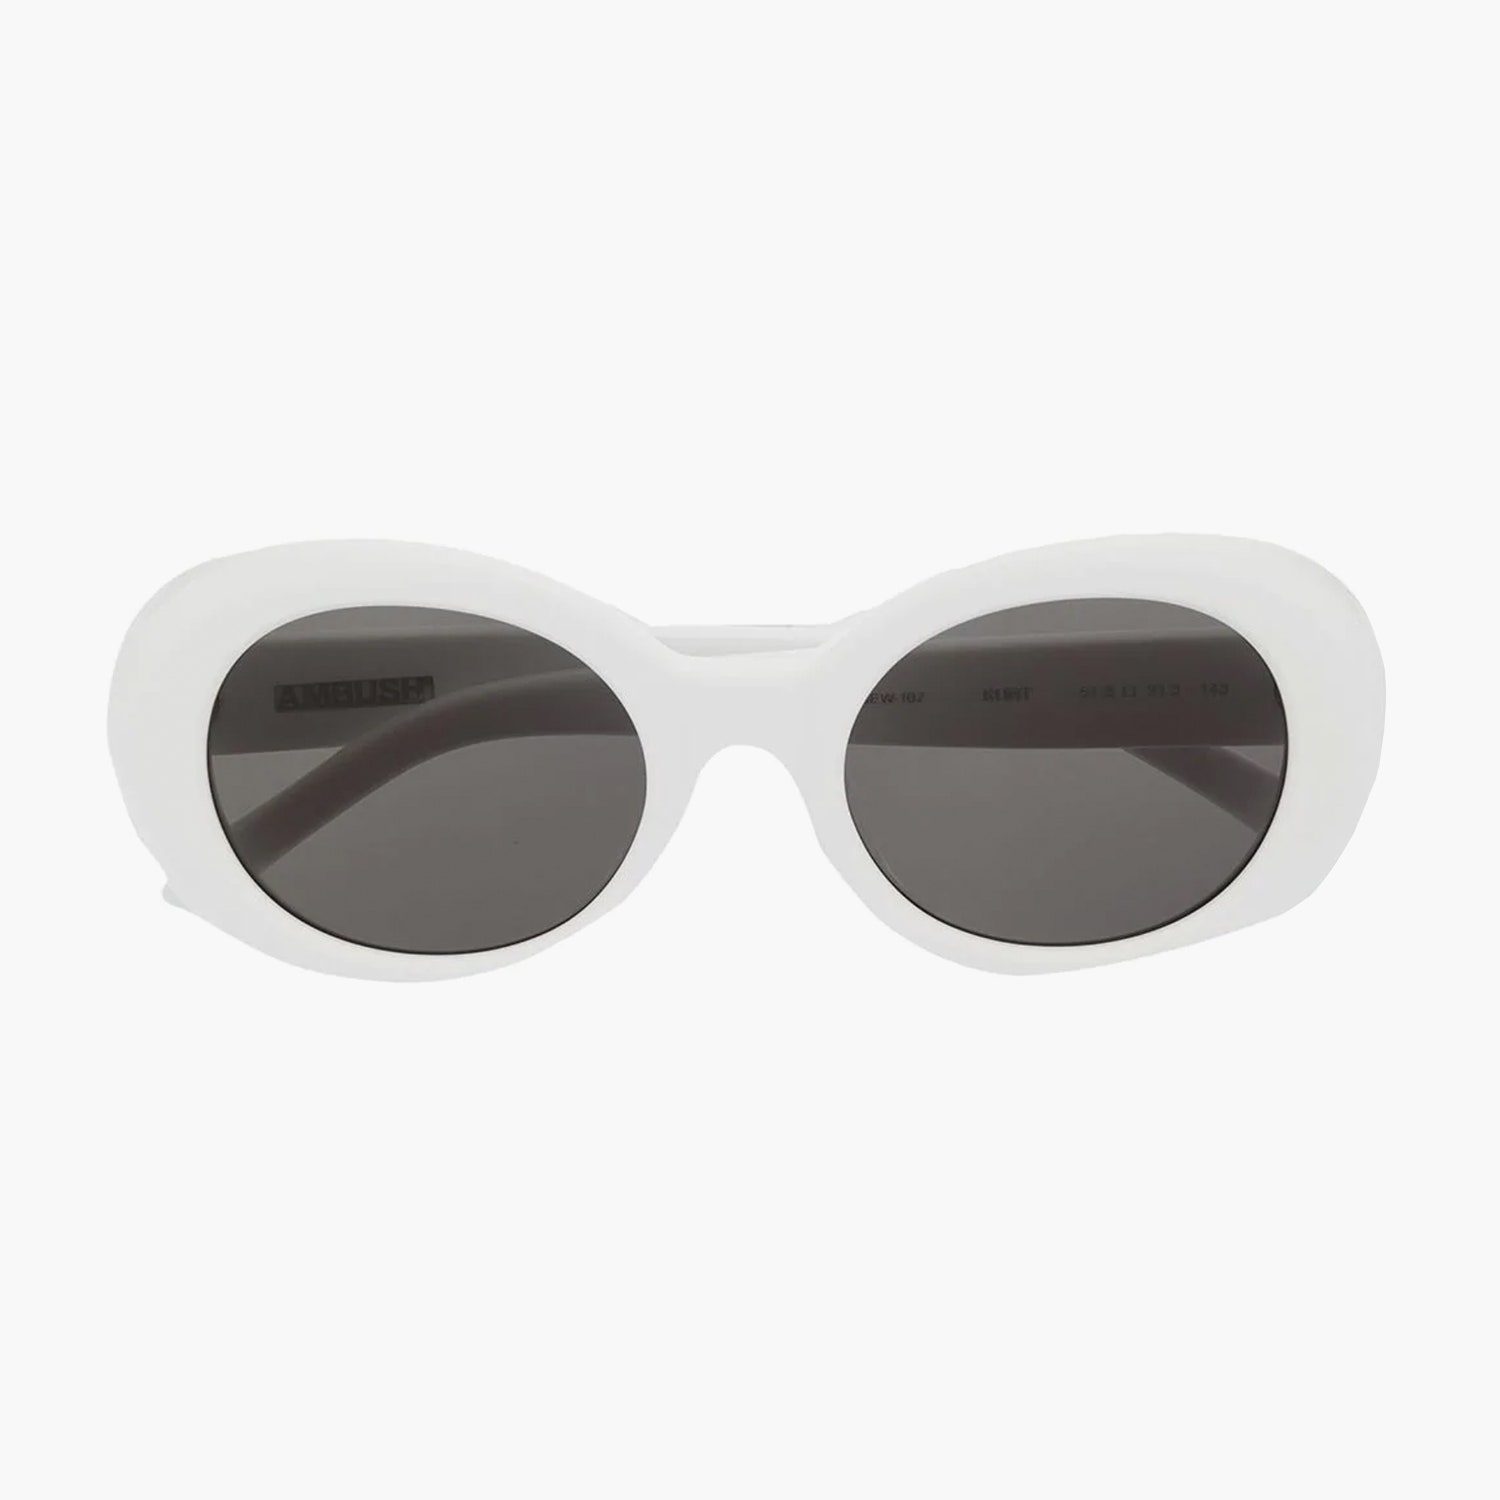 Cолнцезащитные очки Kurt Ambush 21650 рублей farfetch.com